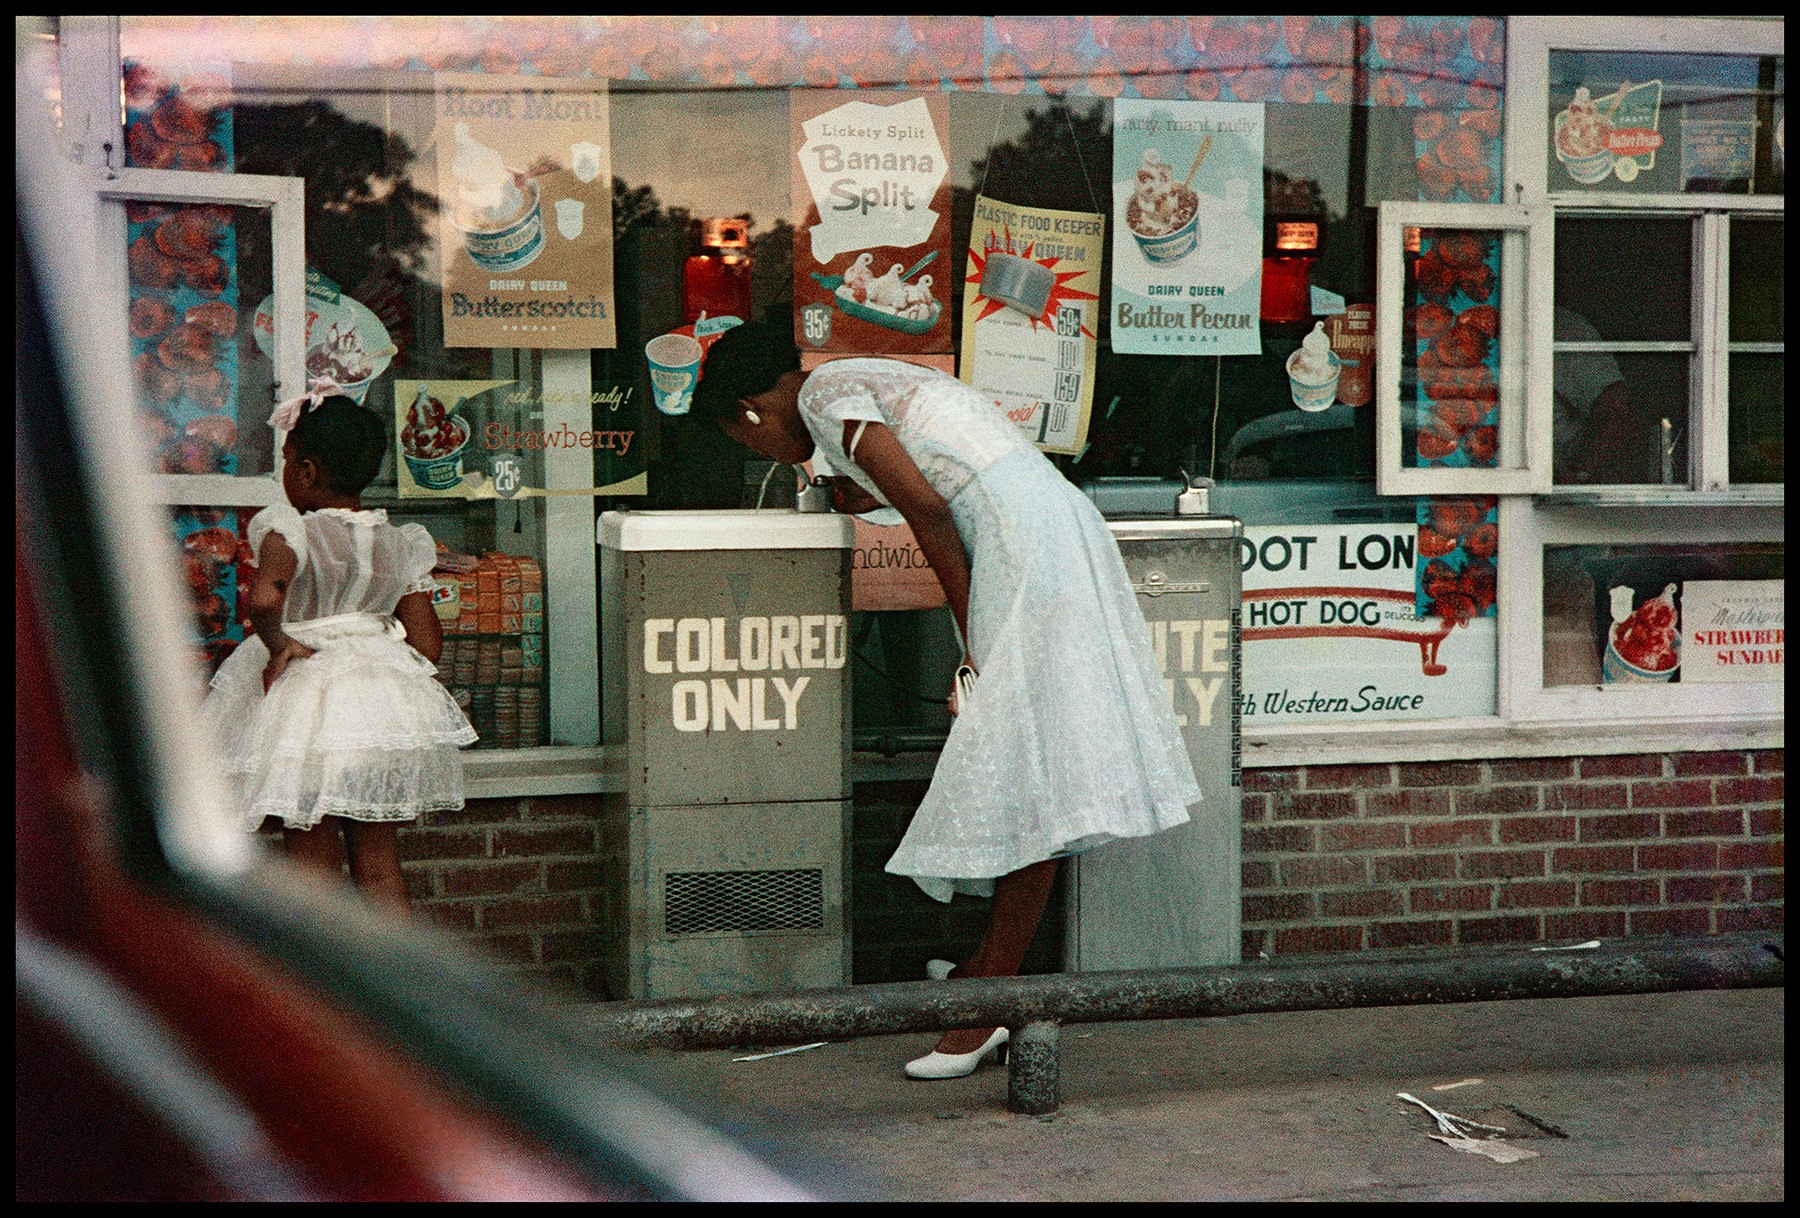 Gordon Parks, African American Photography, African American Lives, Black Thought, African American News, African American Families, KOLUMN Magazine